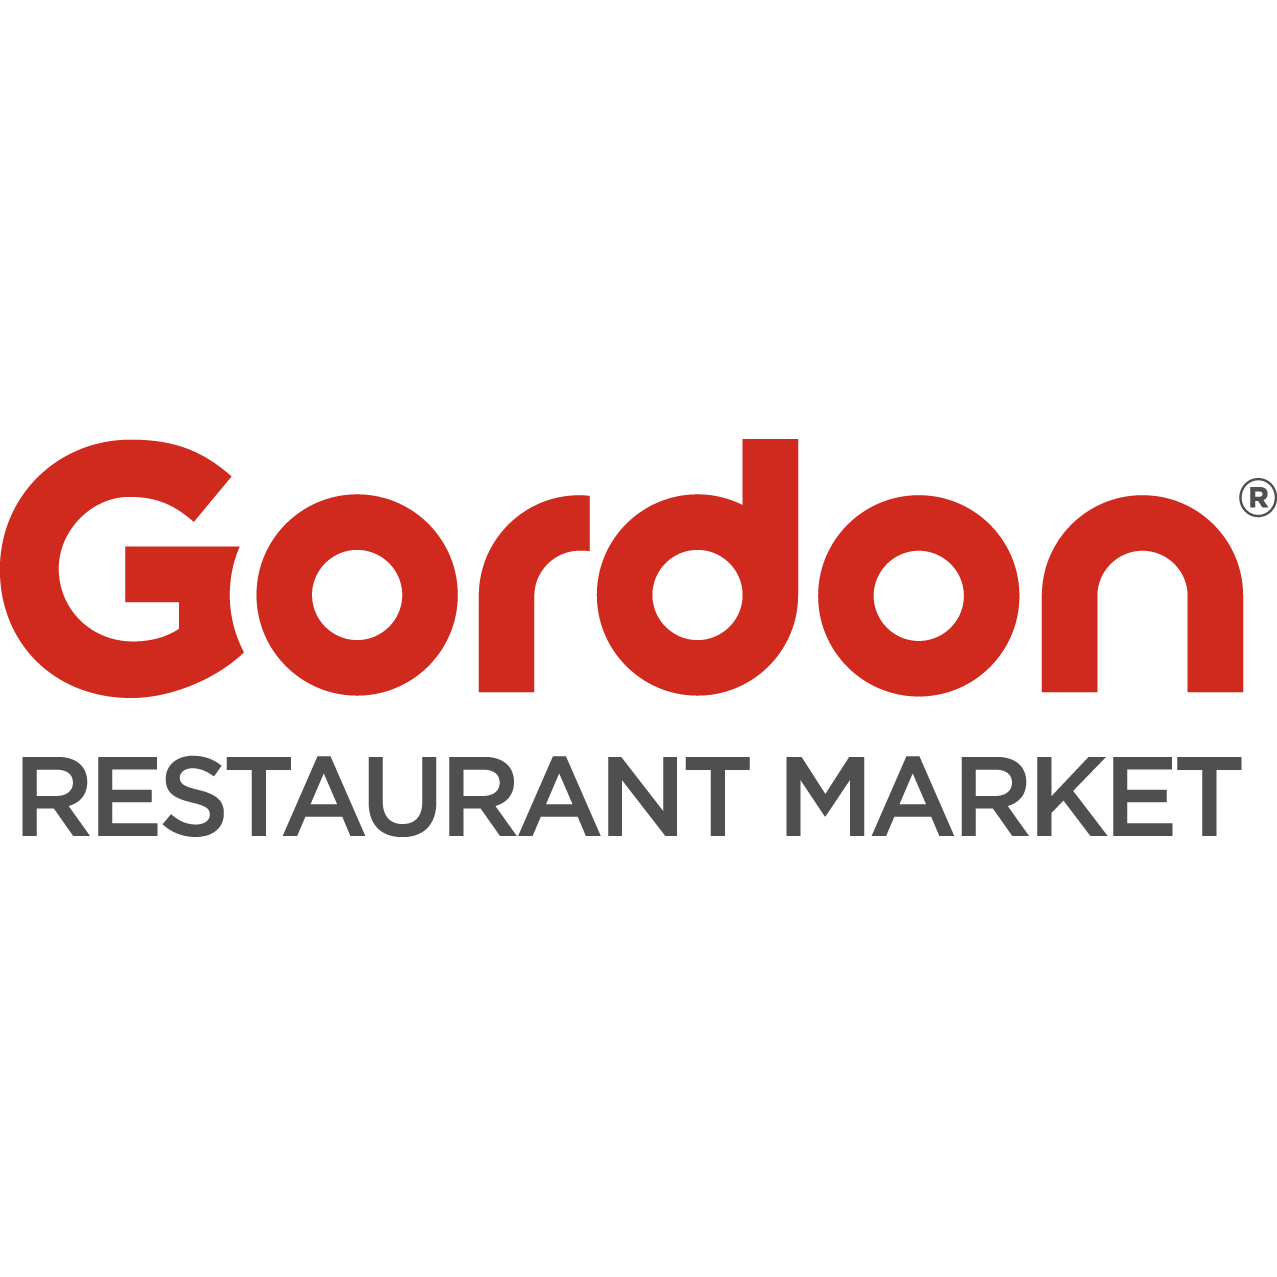 Gordon Restaurant Market